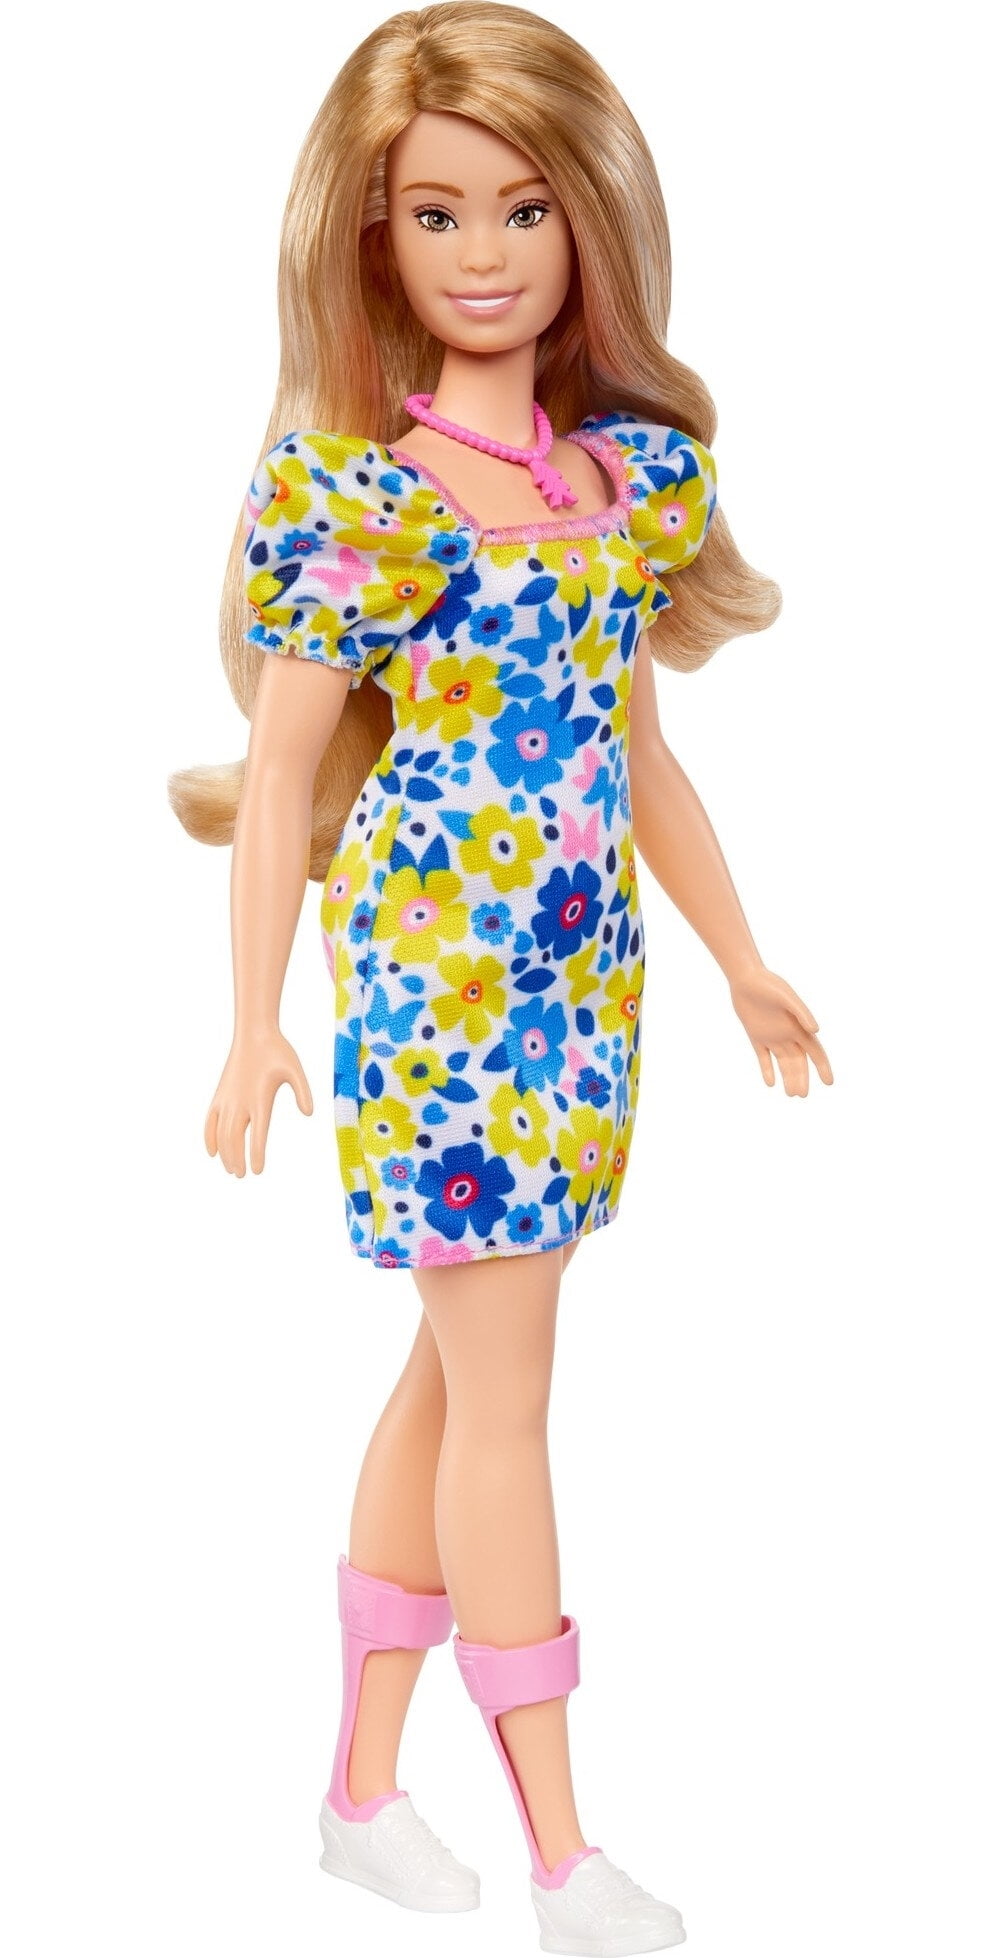 Barbie Fashionistas Doll #208, Doll Down Syndrome Wearing Floral Dress Walmart.com